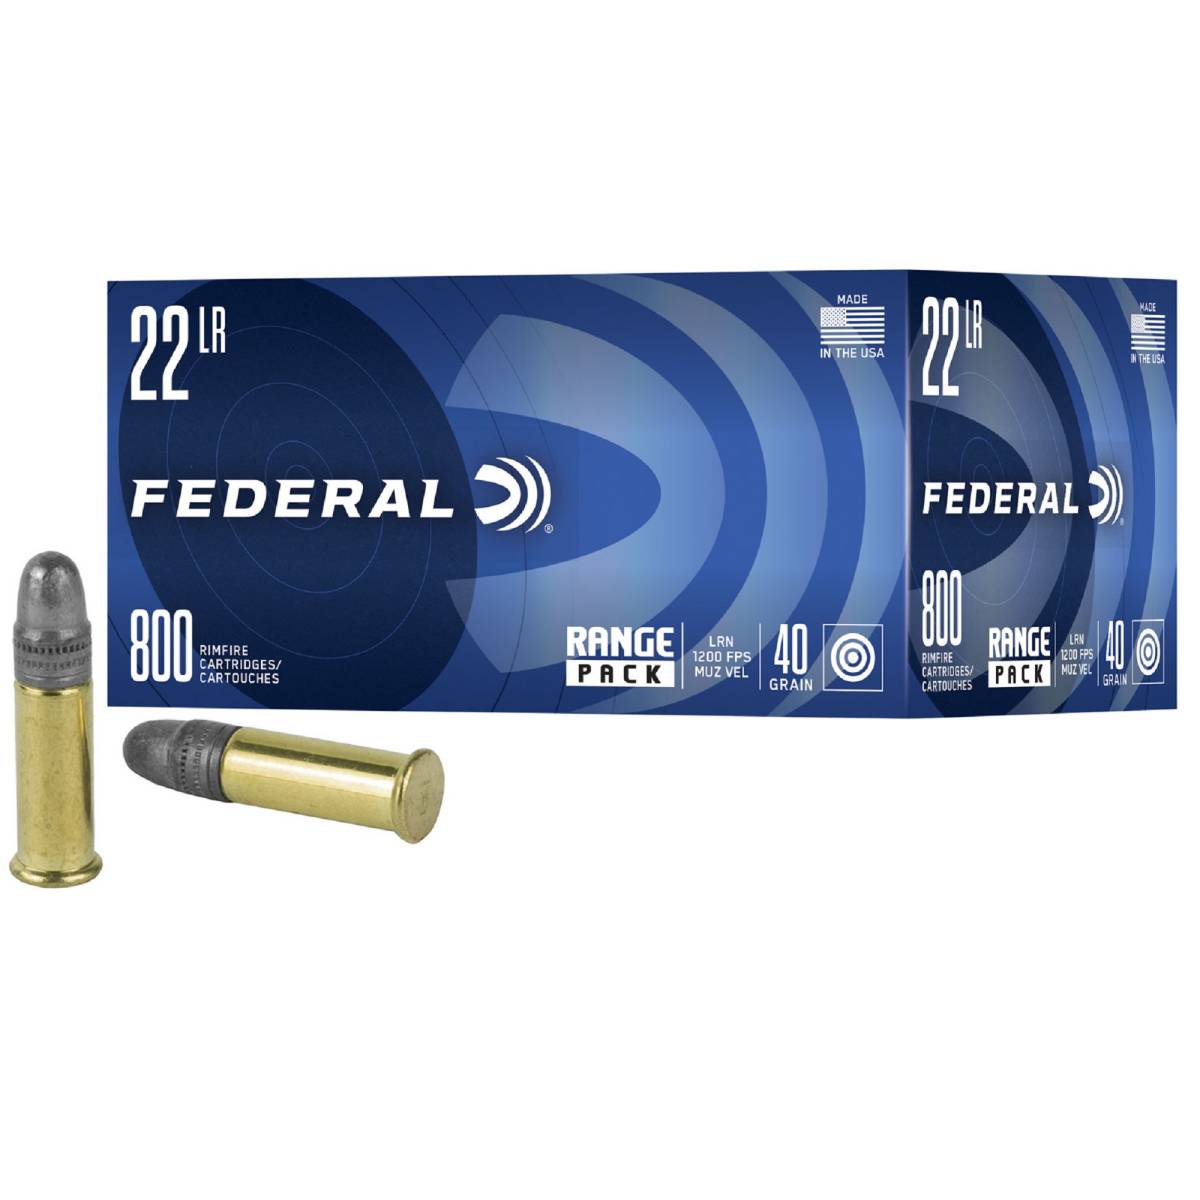 Federal 22LR Ammo 800 Rounds $9.95 Ship Range Pack 22 LR Ammunition rds-img-1